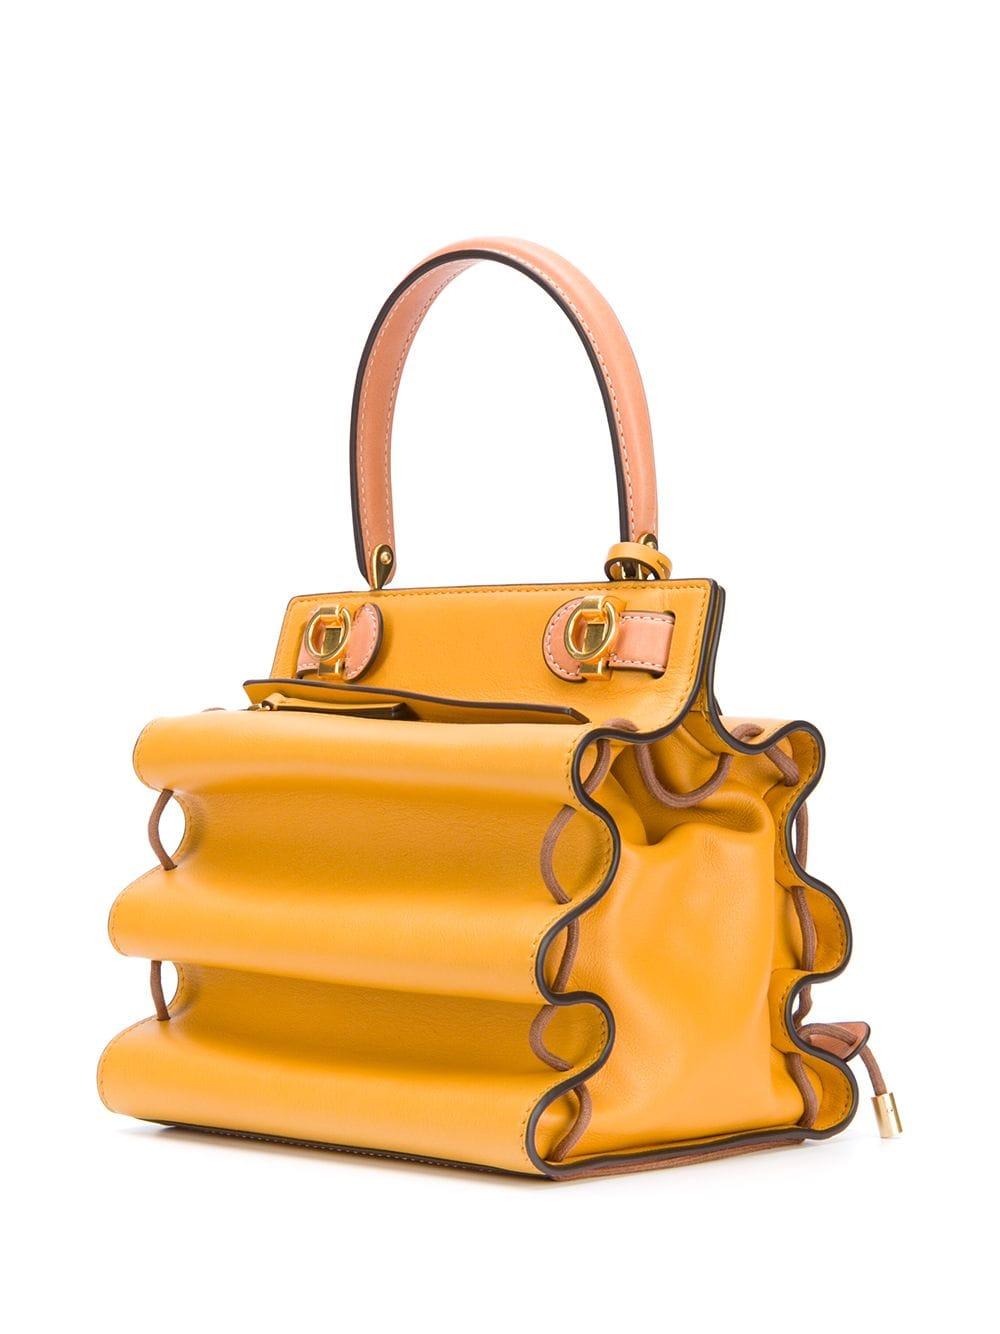 Lee radziwill petite leather mini bag Tory Burch Yellow in Leather -  33210419